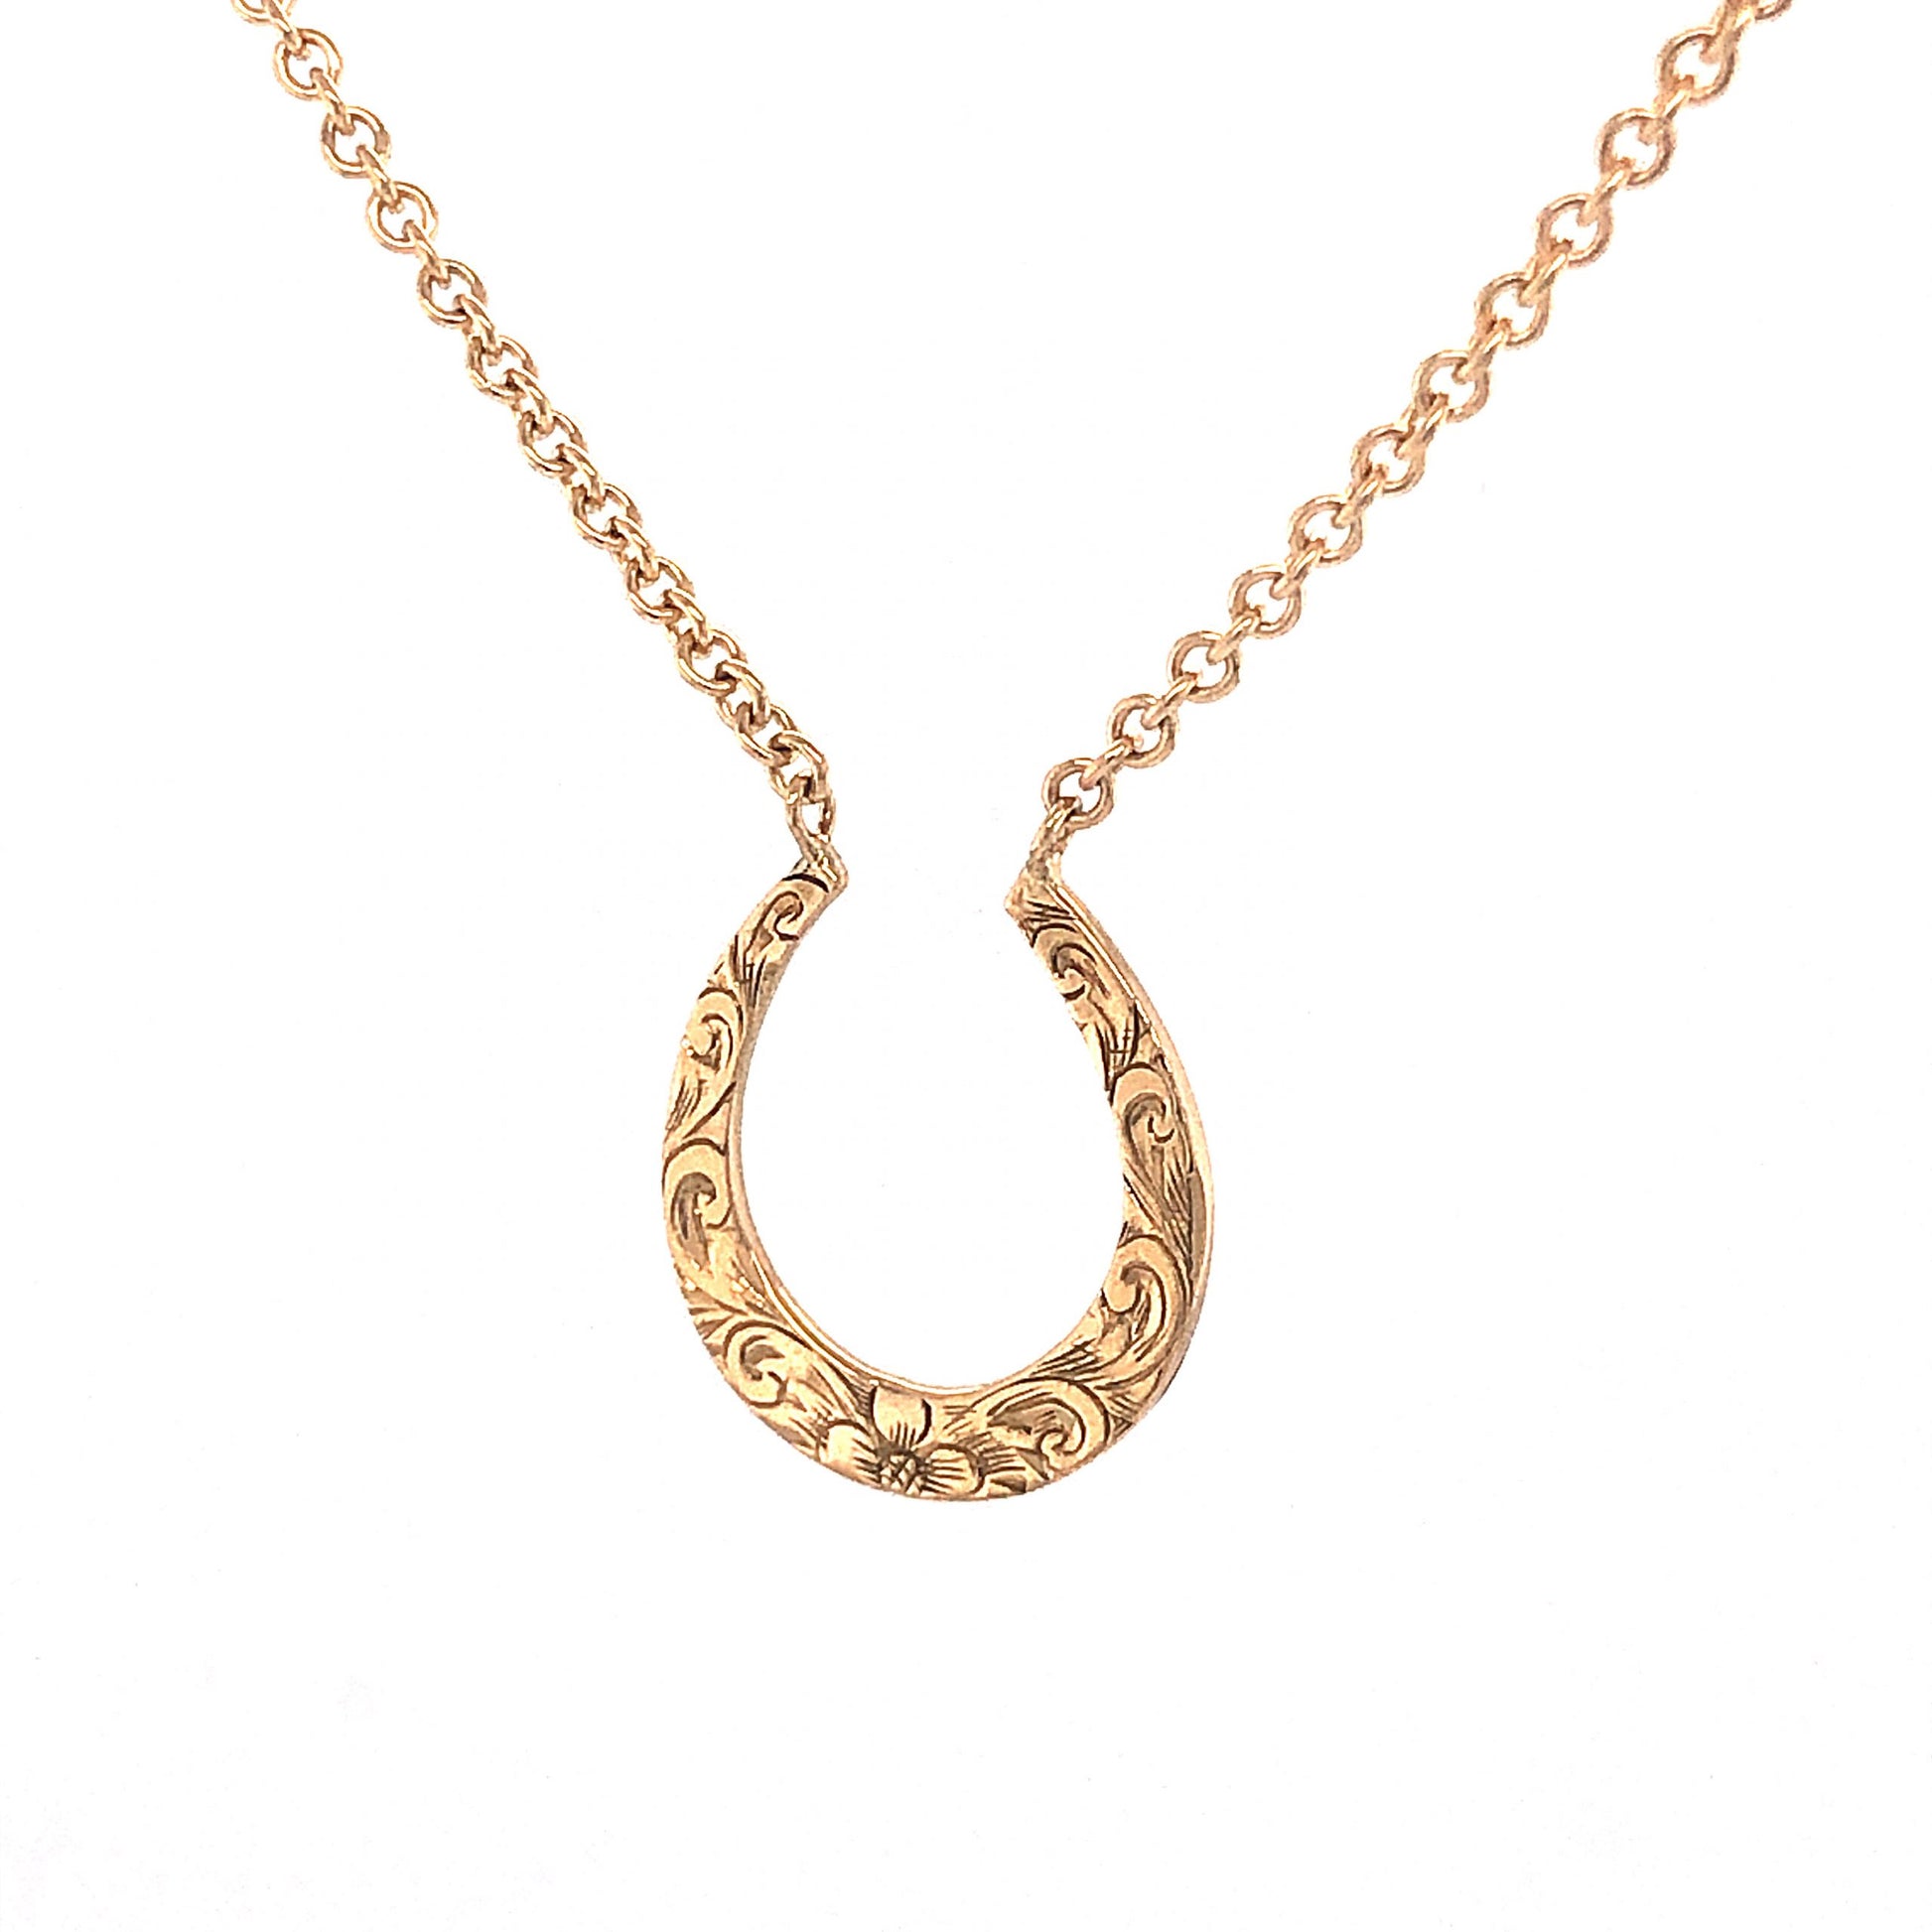 Filigree Horseshoe Pendant Necklace in 14k Yellow GoldComposition: 14 Karat Yellow GoldTotal Gram Weight: 4.0 gInscription: 14k 585